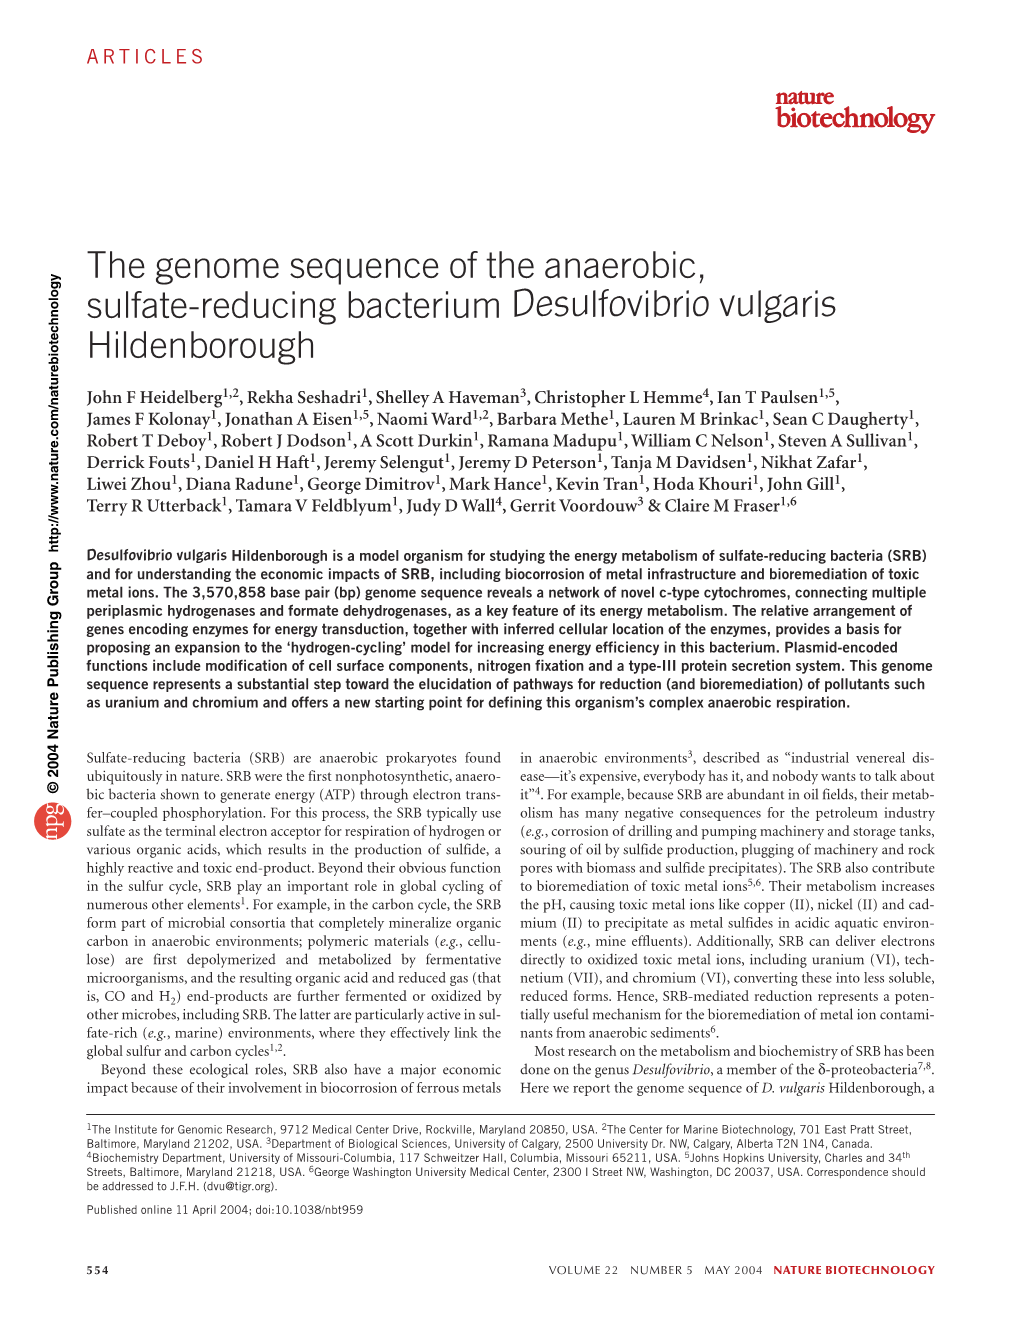 The Genome Sequence of the Anaerobic, Sulfate-Reducing Bacterium Desulfovibrio Vulgaris Hildenborough